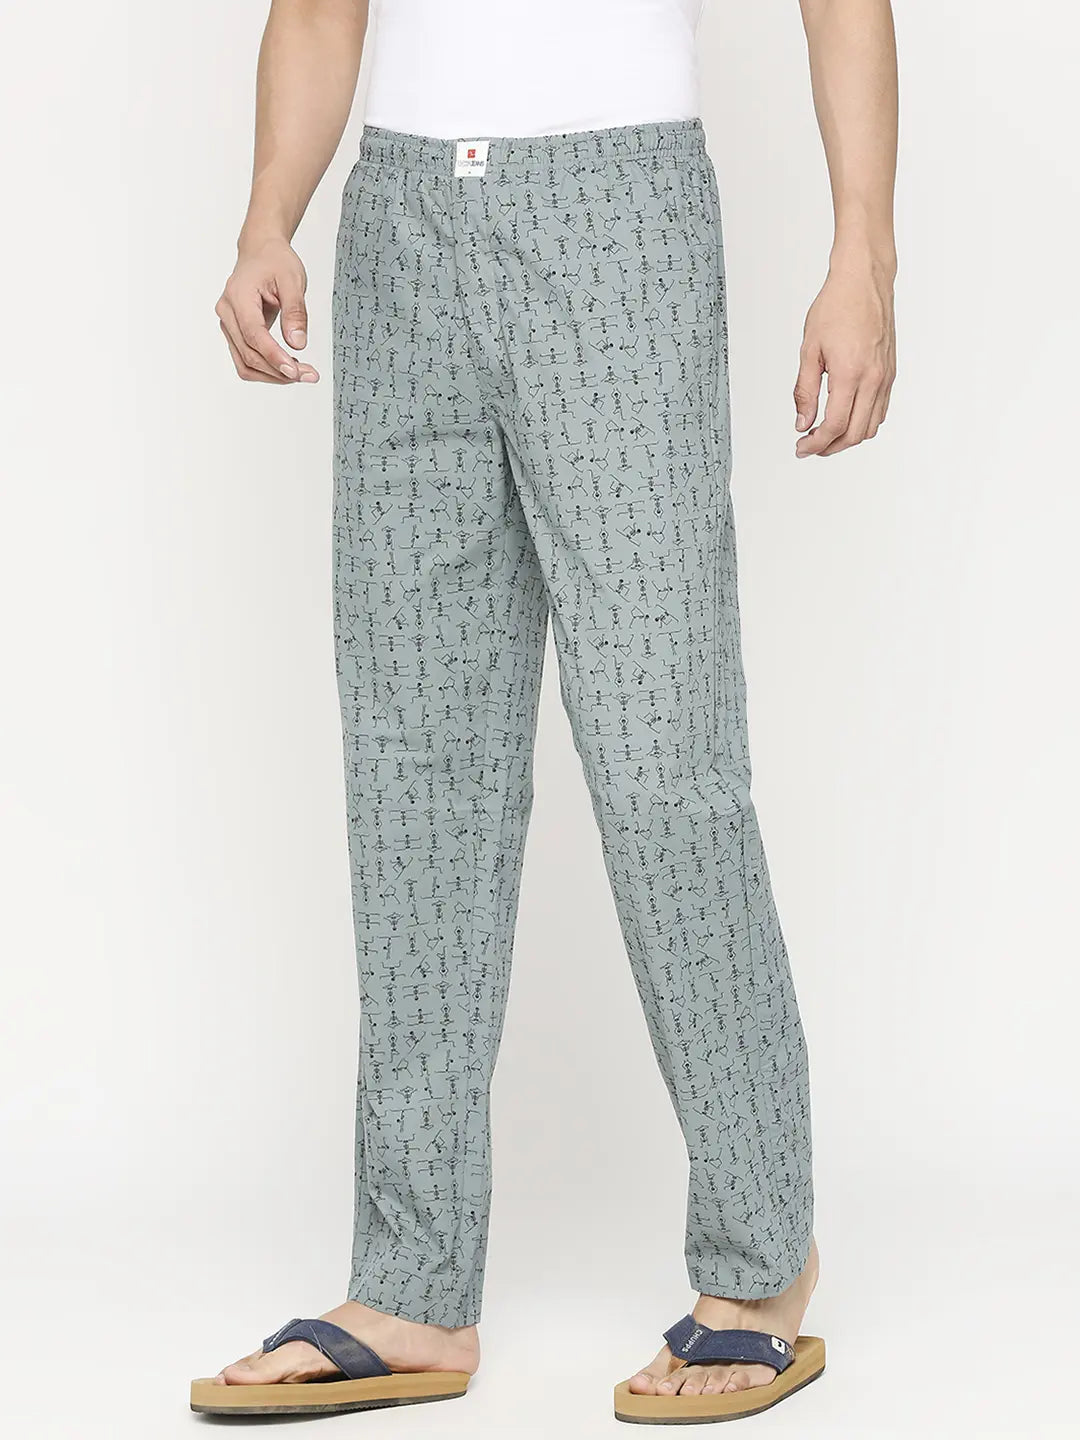 Jinxer Pajama Pants For Men Cotton Lounge Pants Lowers Grey  Cupid  Clothings